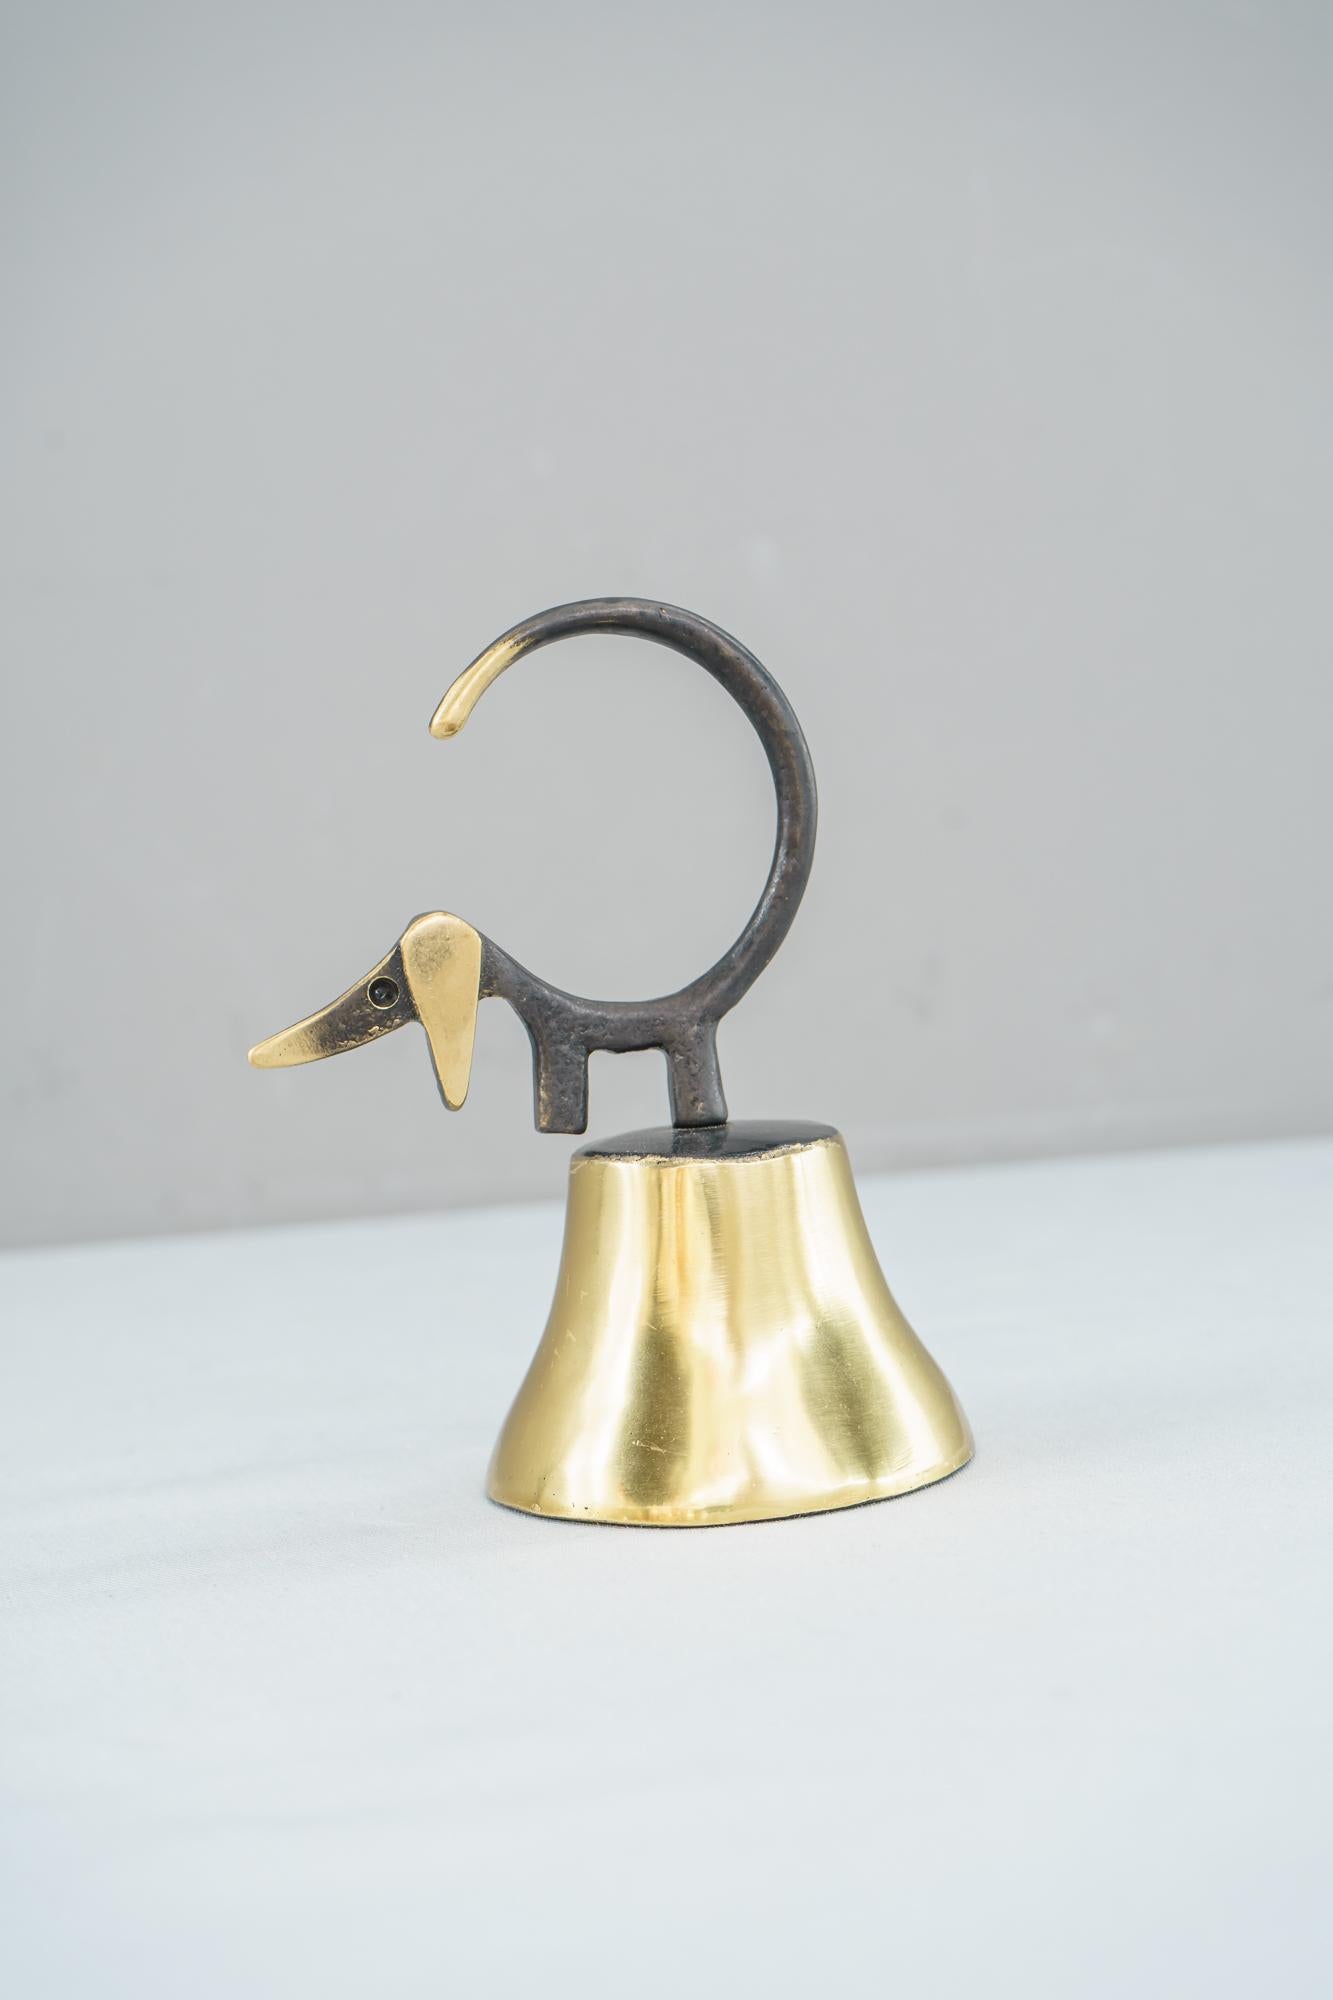 Walter Bosse dachshund dinner bell, 1950s
Original condition.